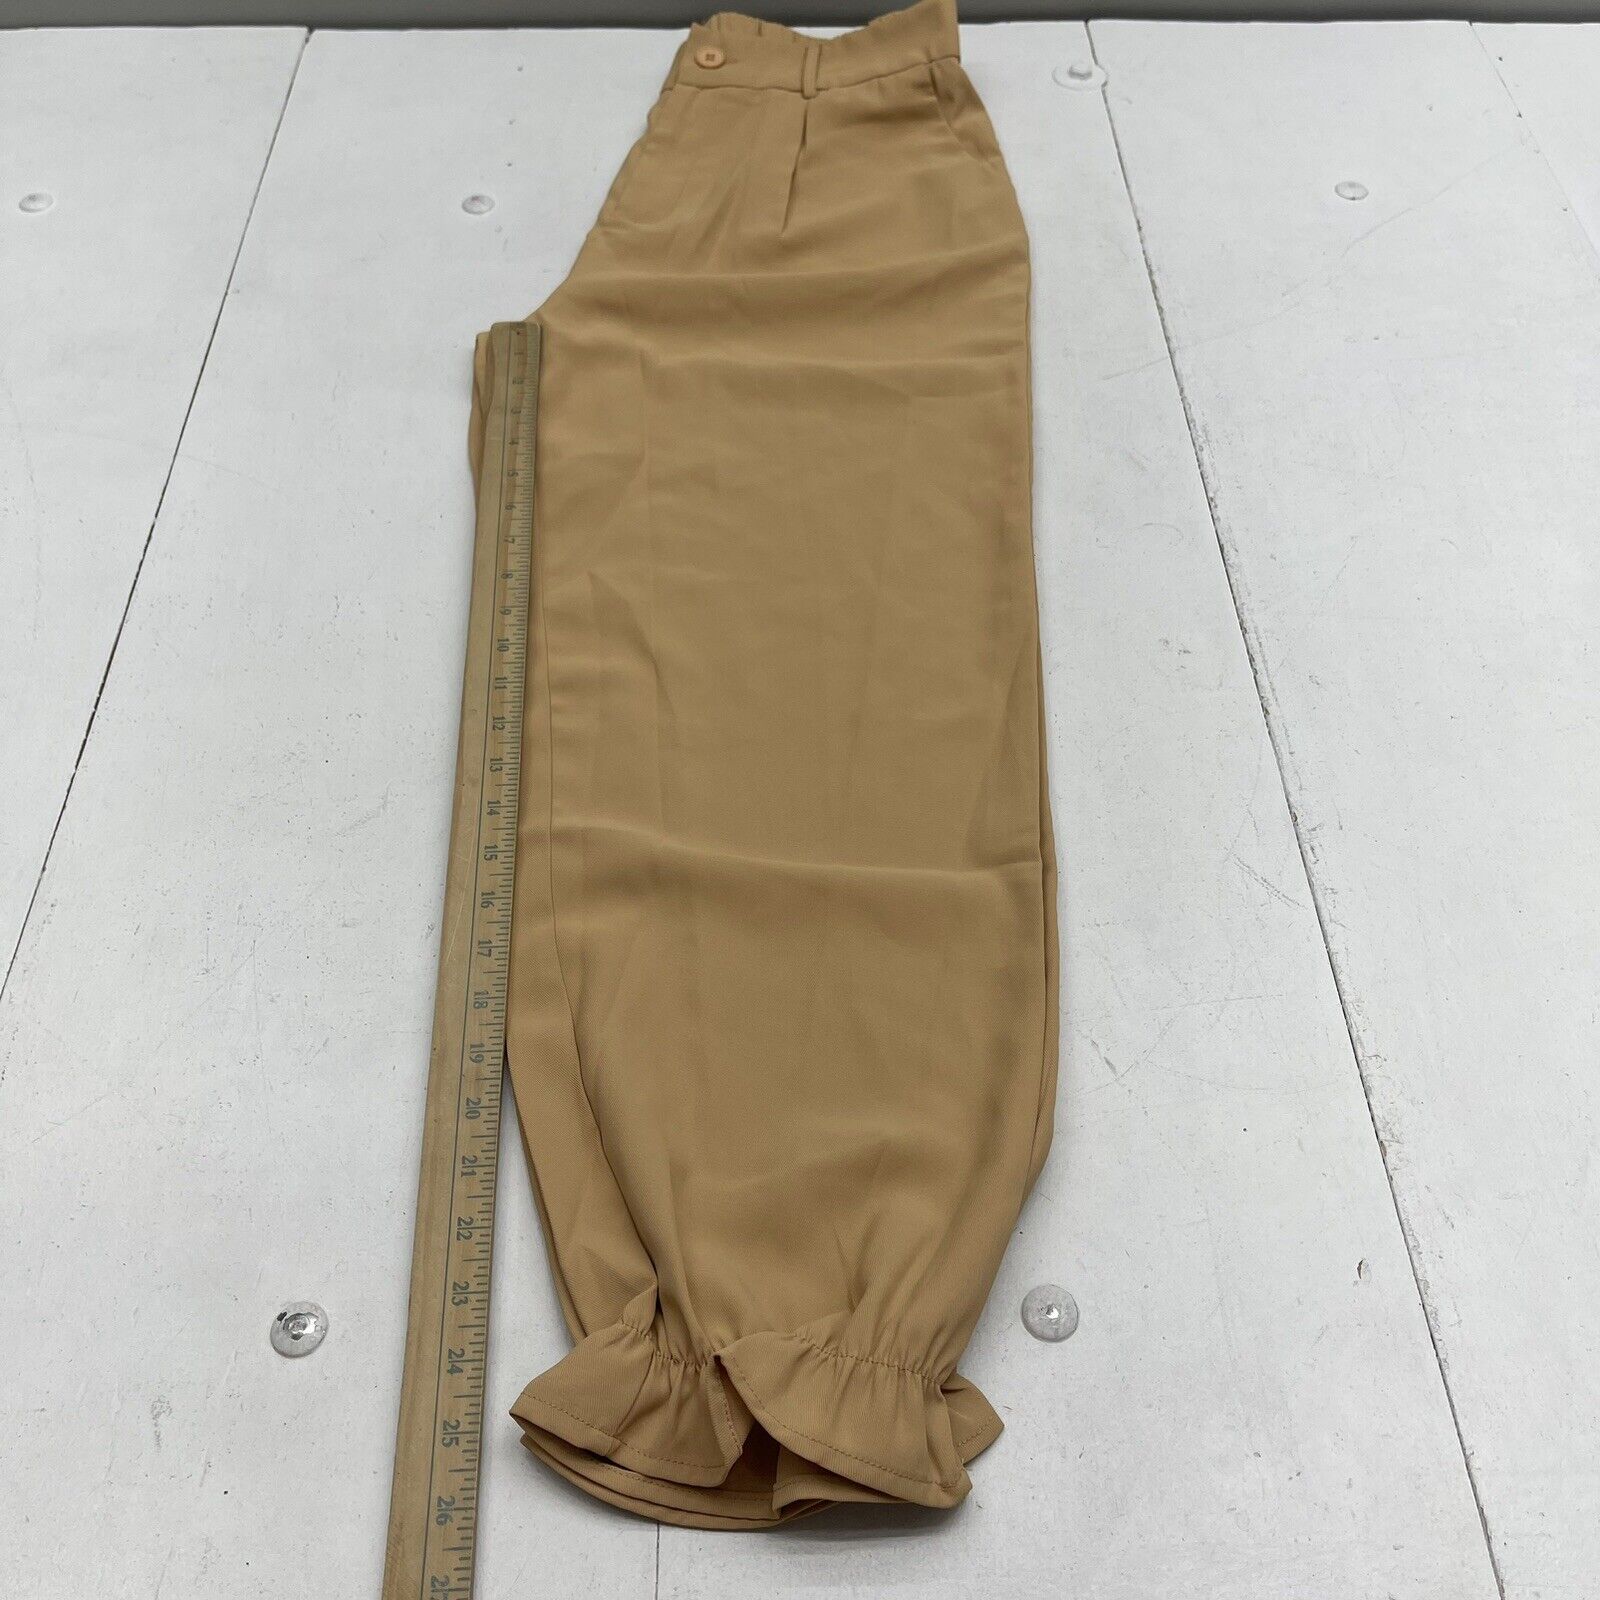 Senbo Tan Tank Top And Pant Set Women's Size Large New - beyond